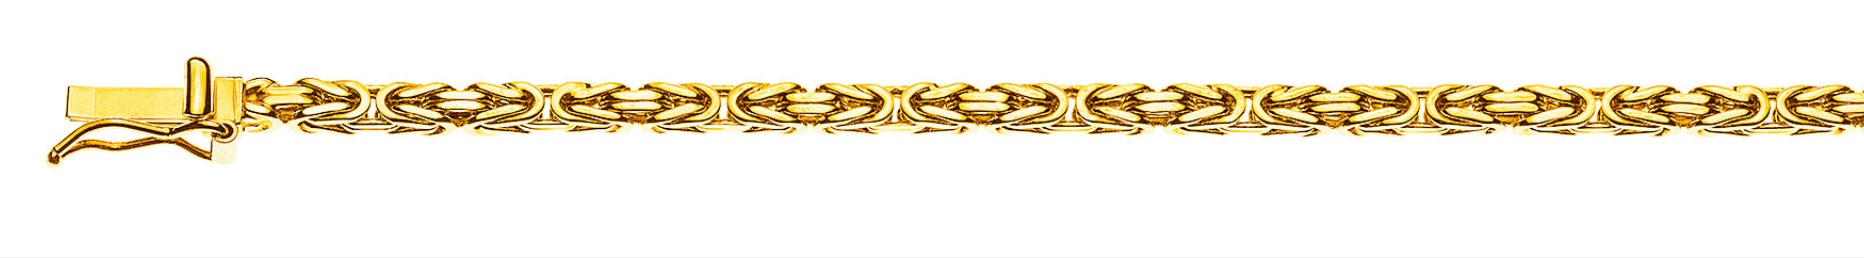 AURONOS Prestige Necklace Yellow Gold 18K King Chain 55cm 2.5mm